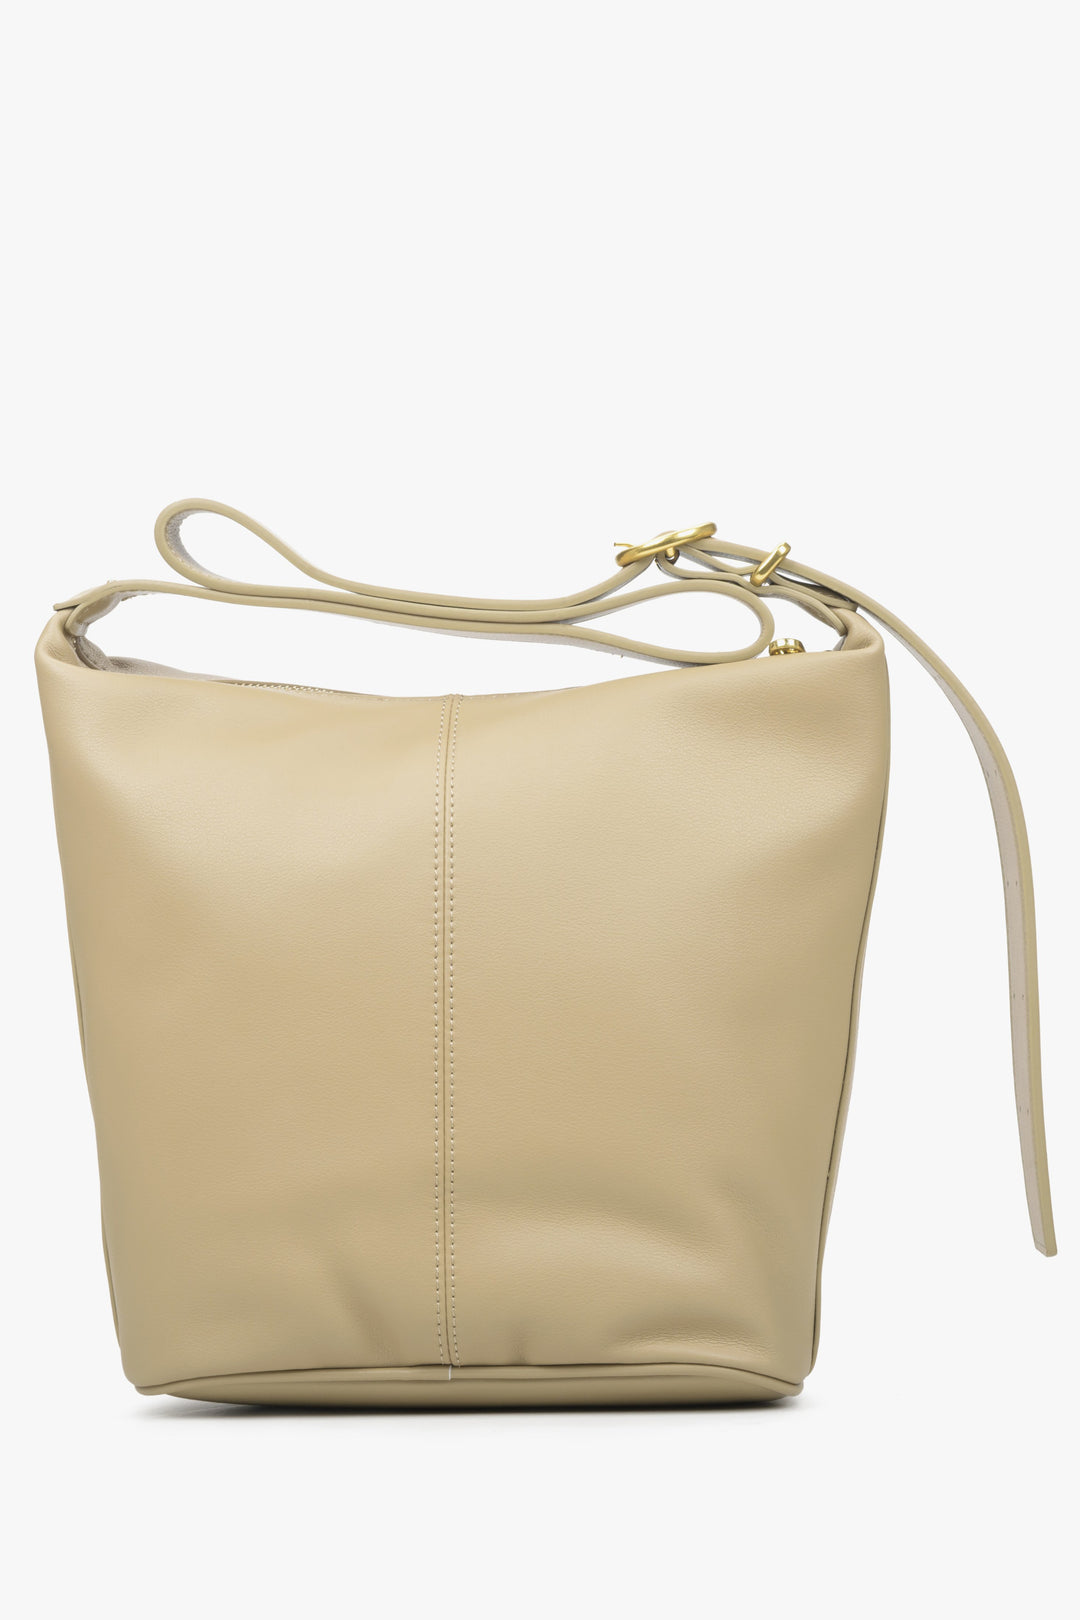 Beige leather bucket style Estro bag.